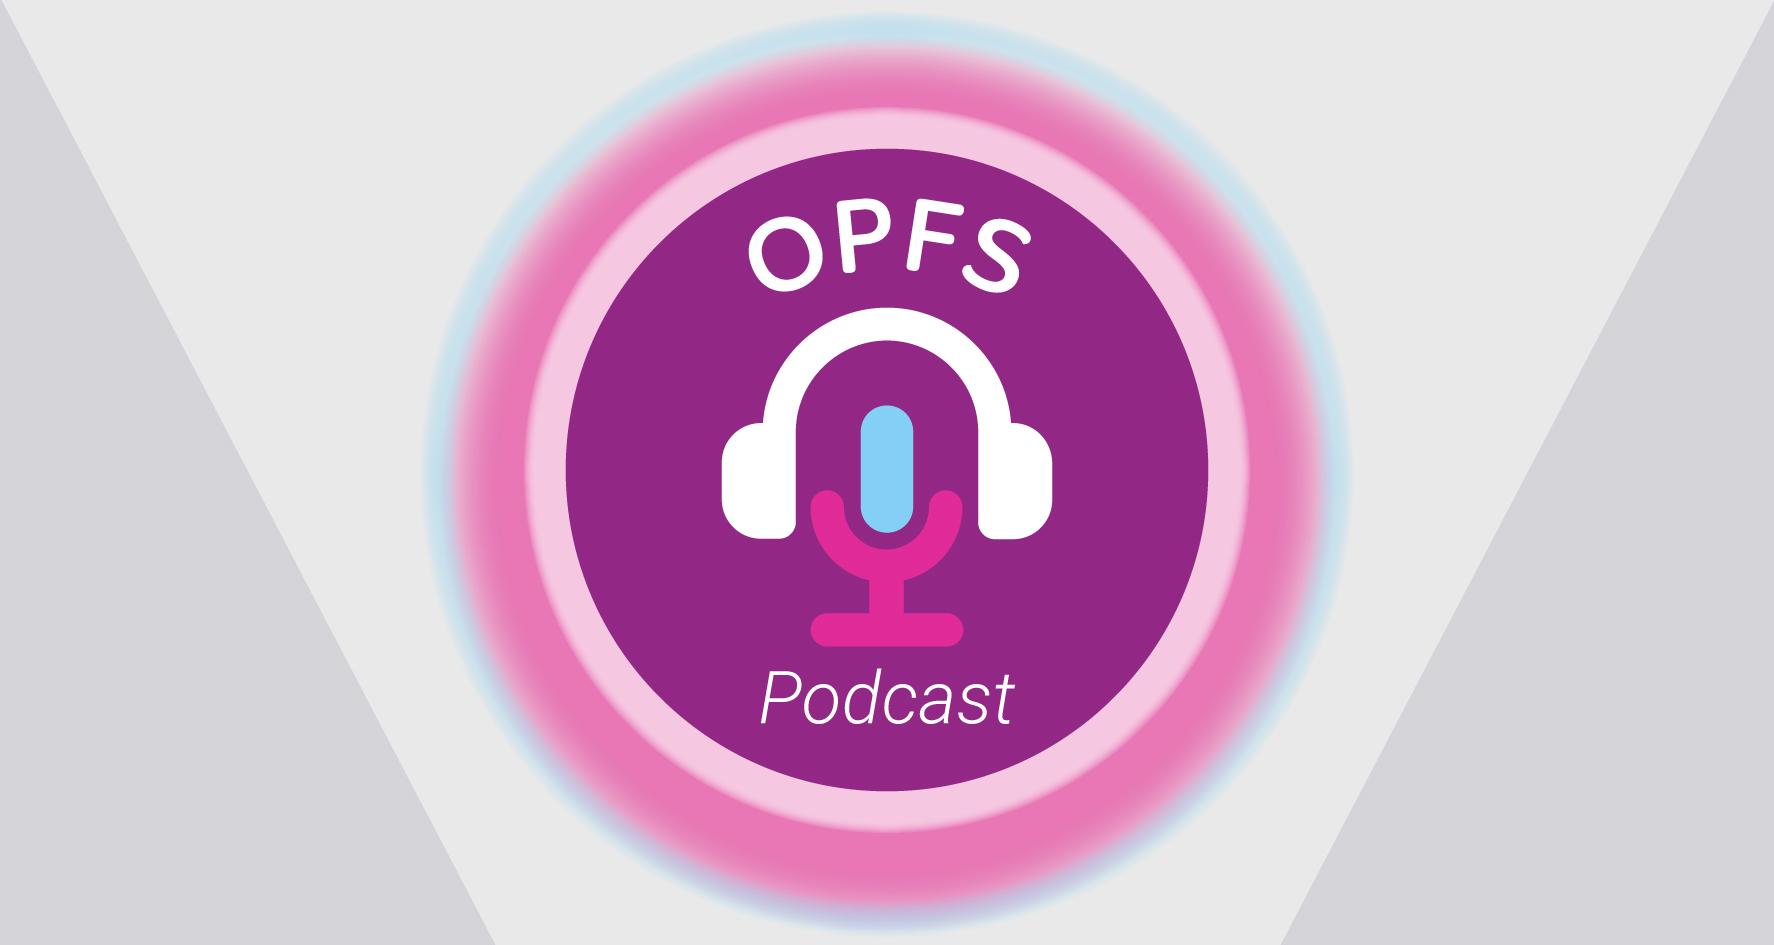 OPFS podcast